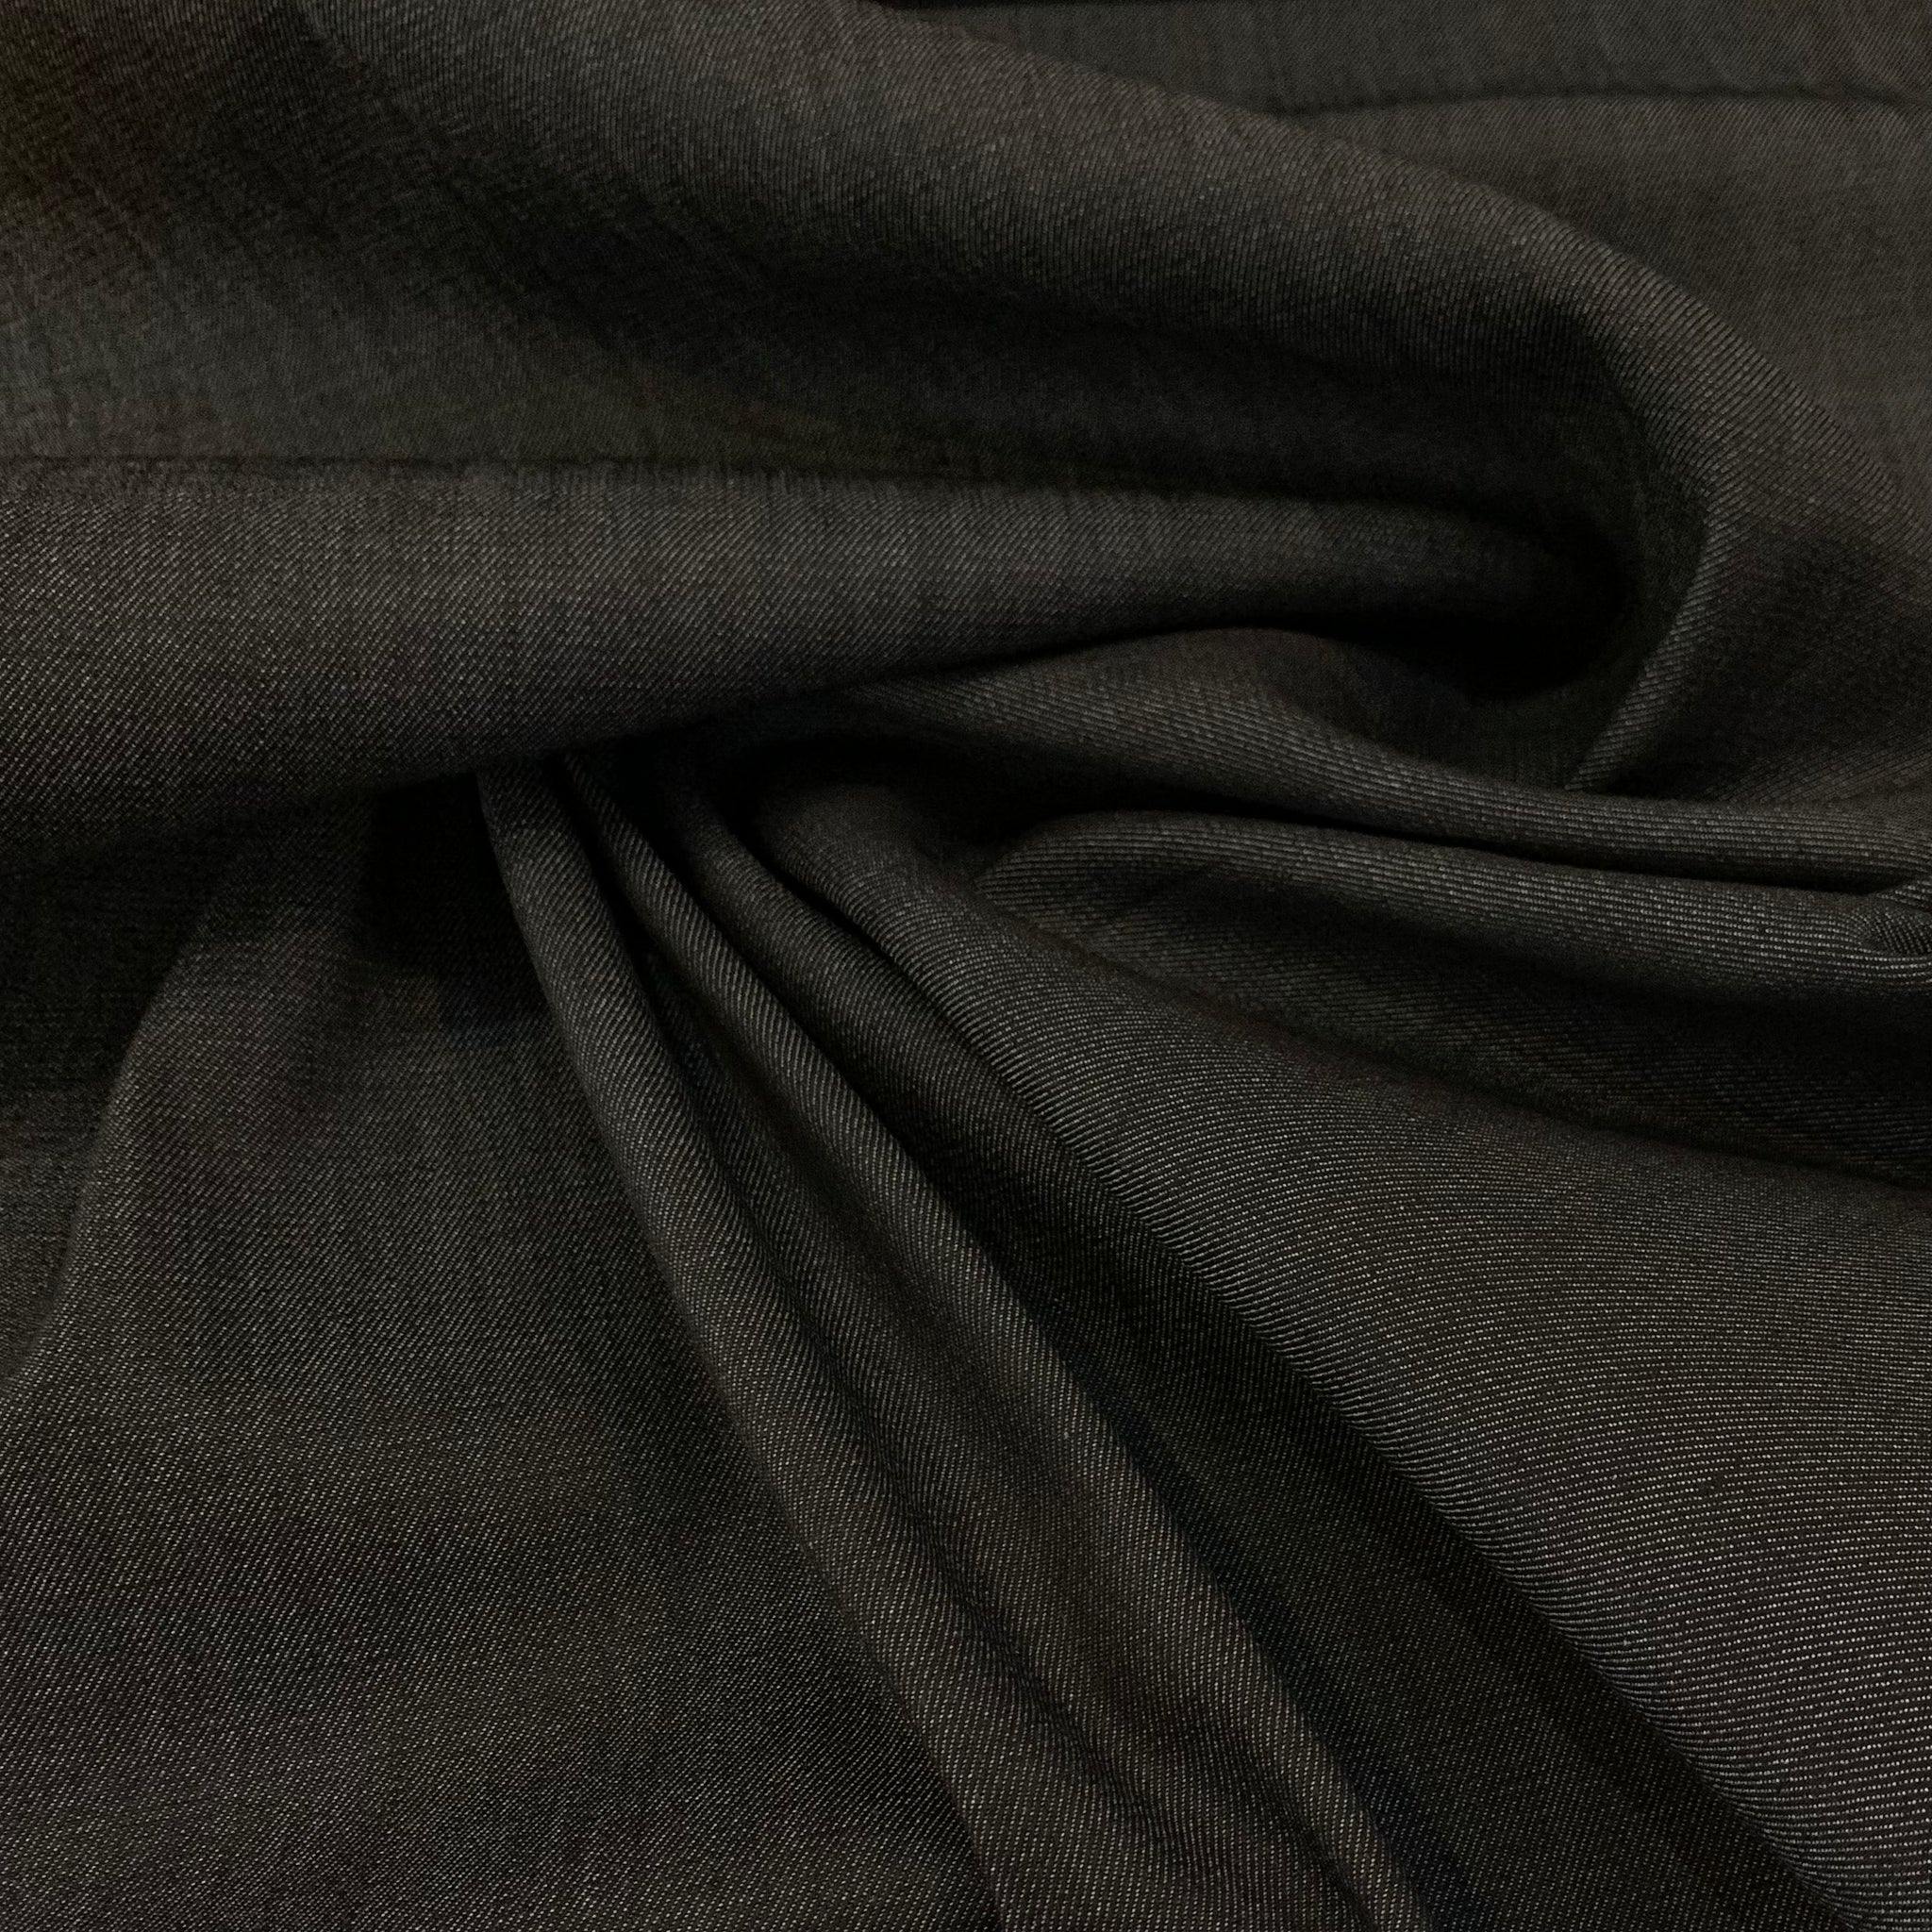 Stretch Denim Cotton Spandex Fabric - Washed Black